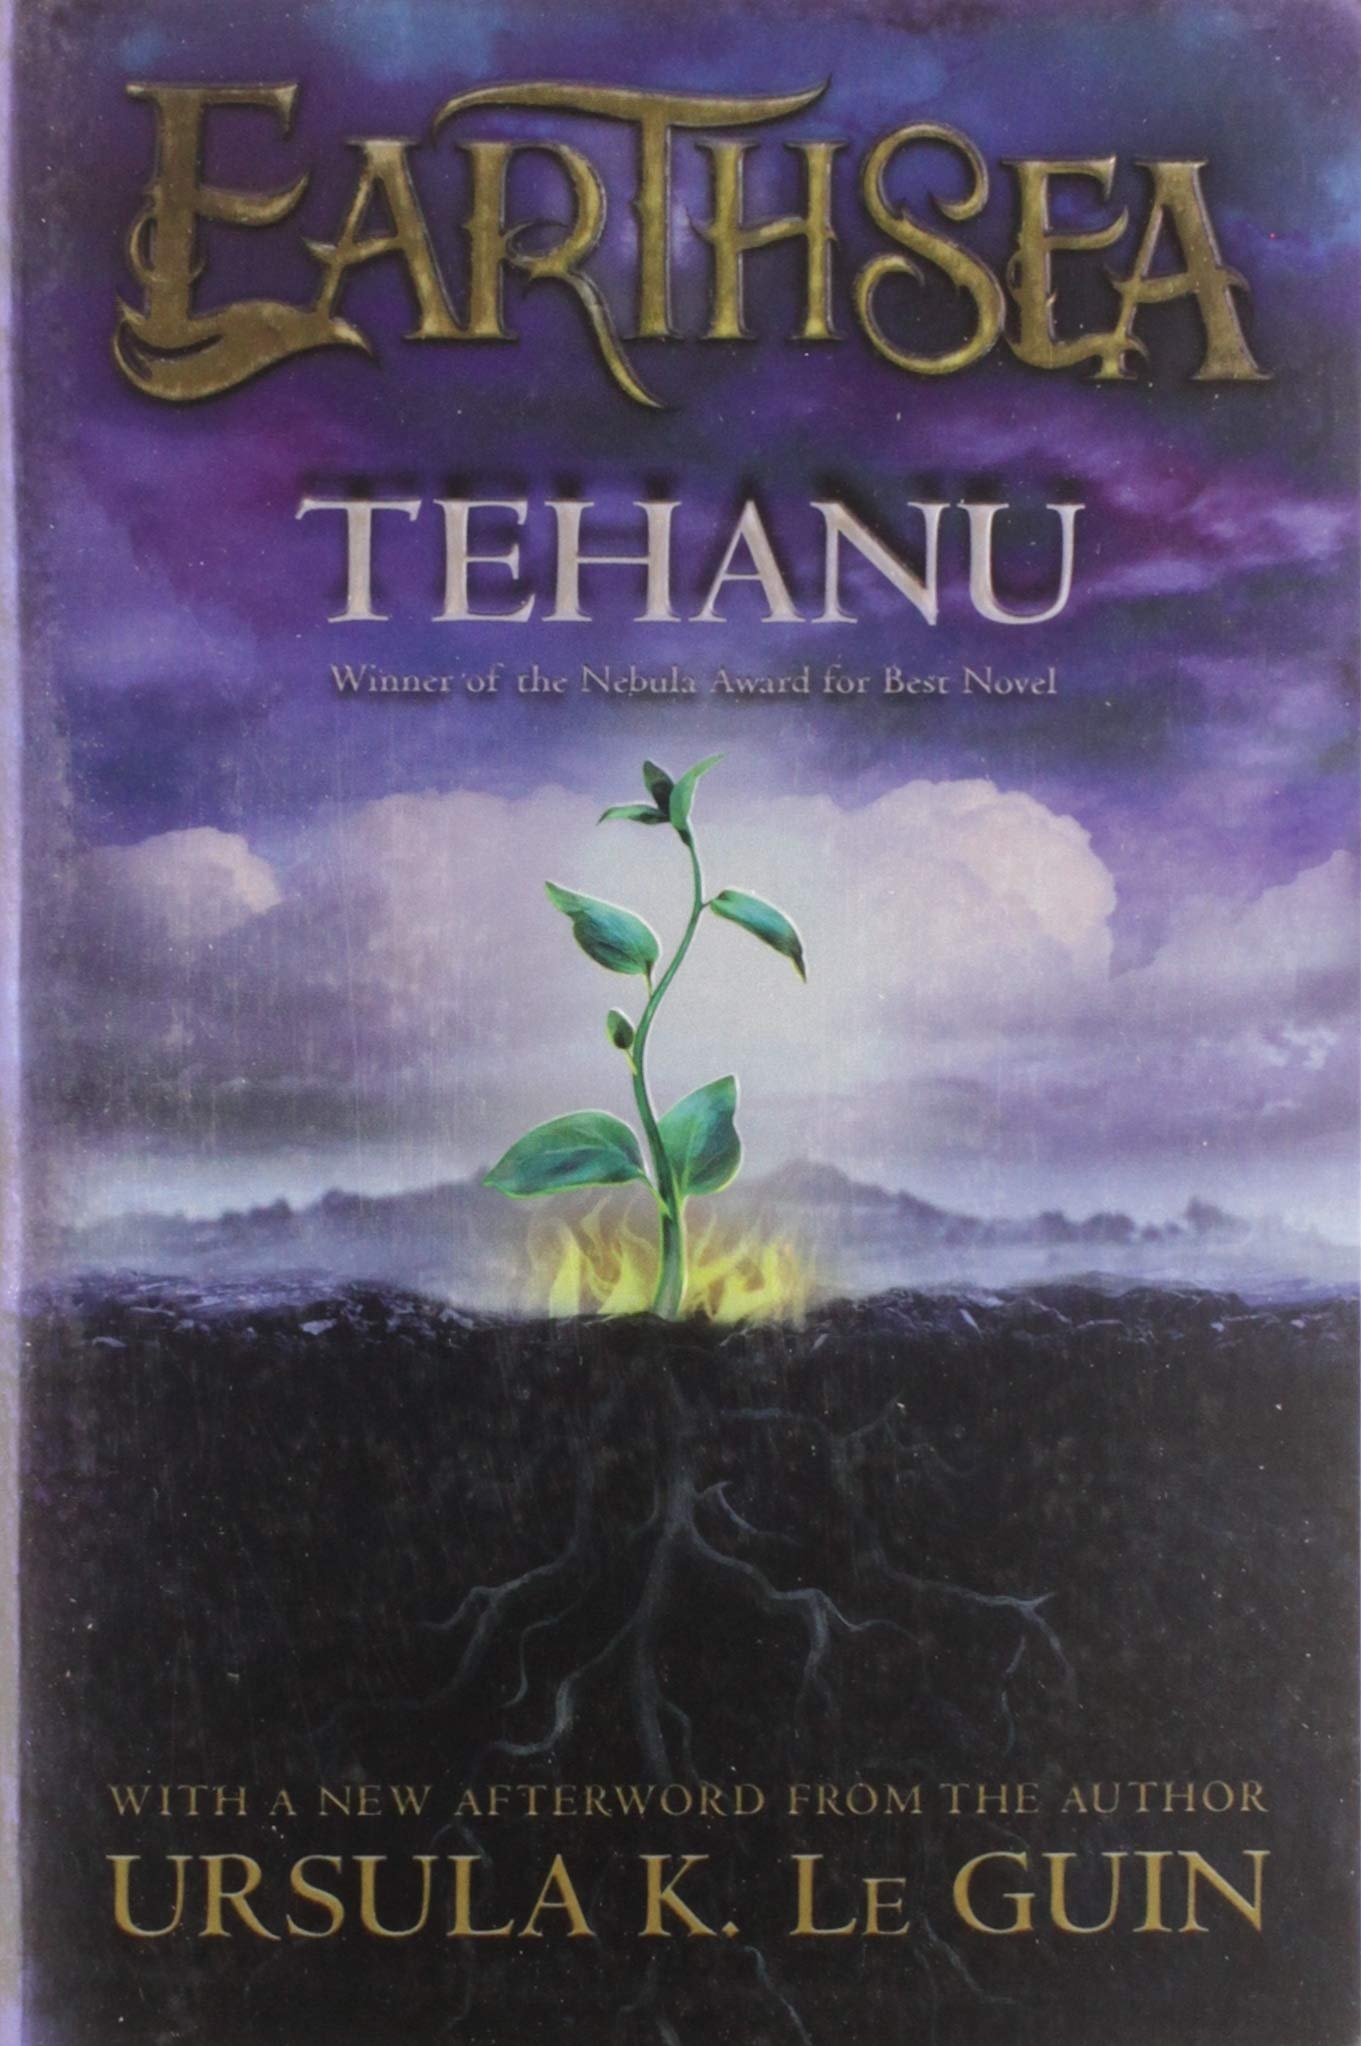 Earthsea #4 : Tehanu by Ursula K. Le Guin